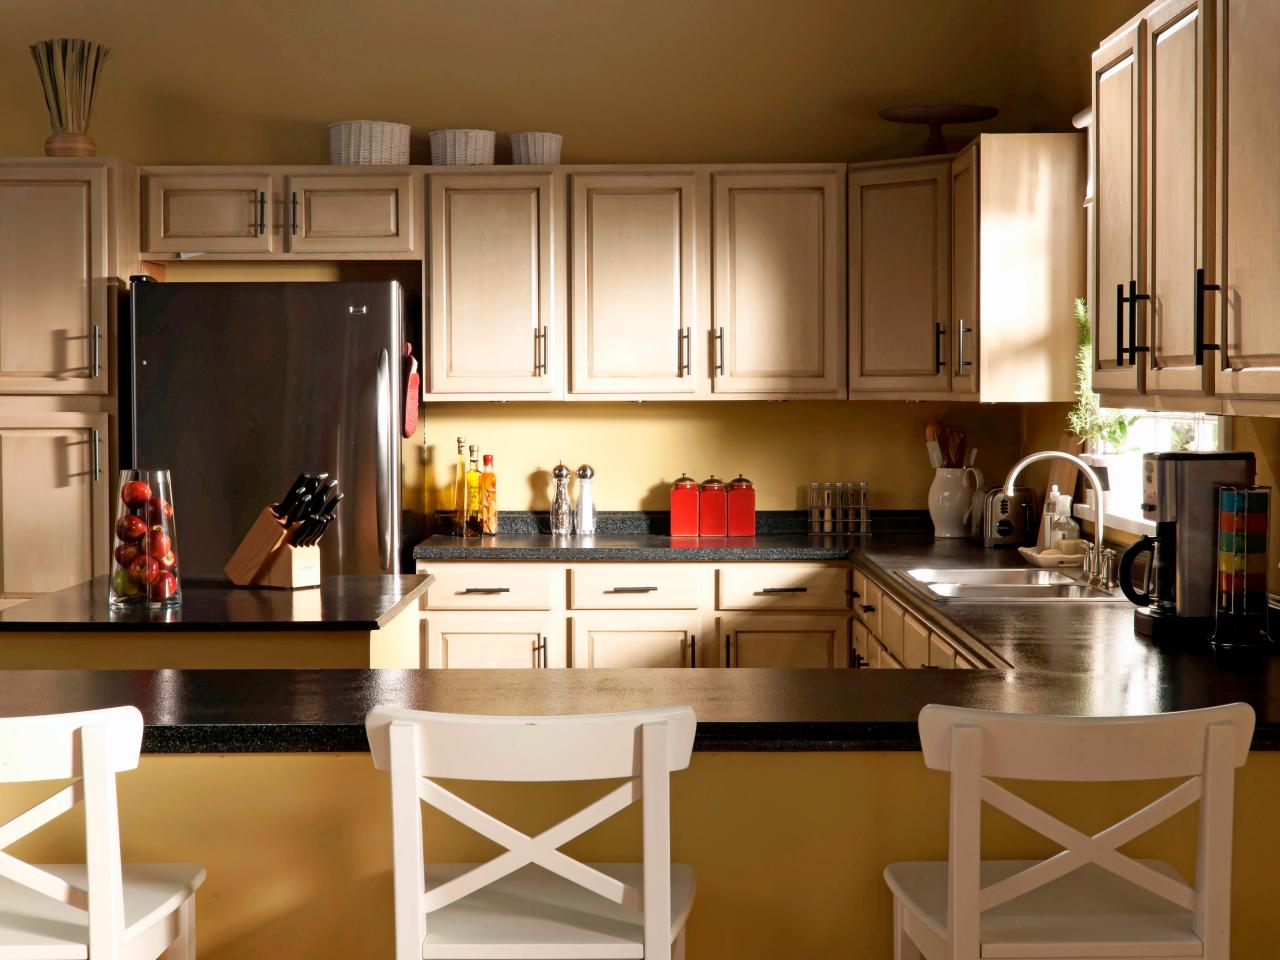 How To Paint Laminate Kitchen Countertops Diy,Corner Kitchen Cabinet Organizer Rack